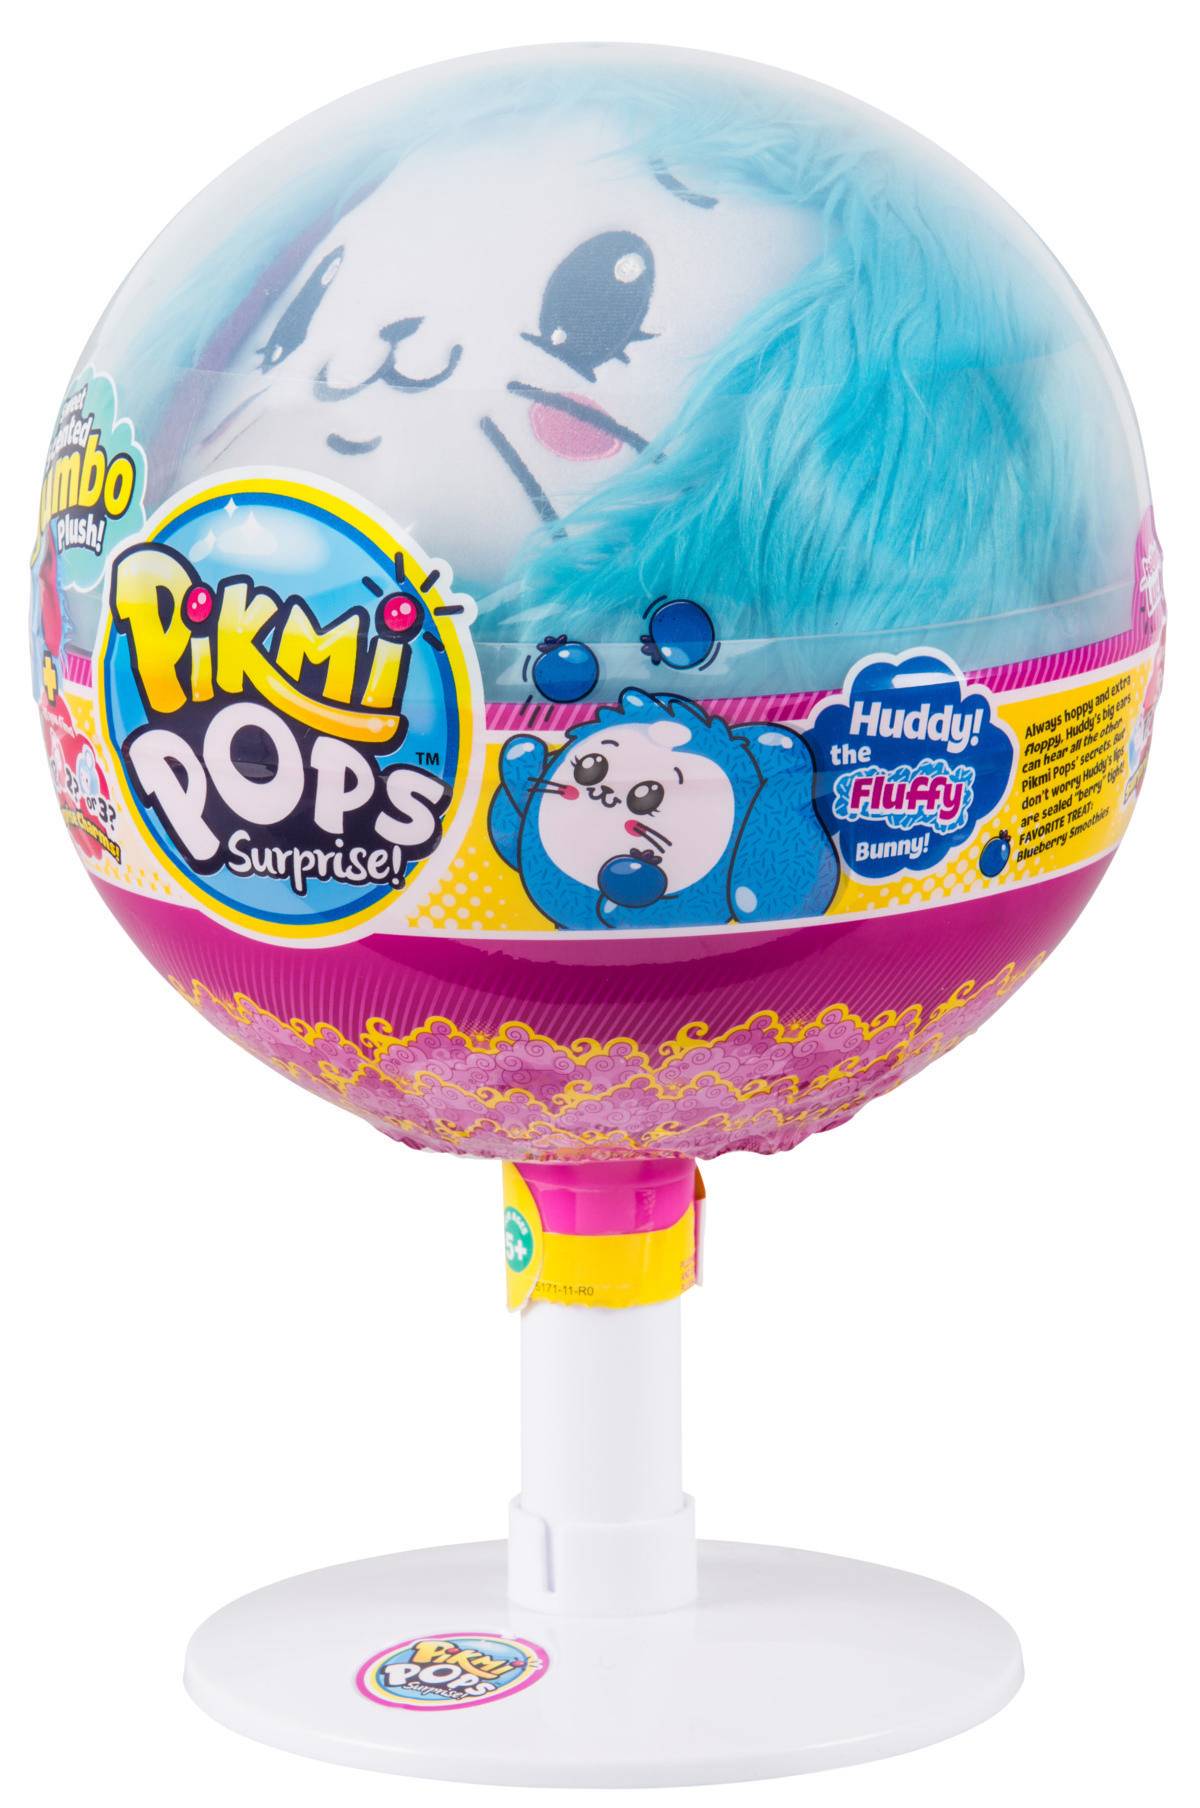 Поп сюрприз. Игрушки Pikmi Pops сюрприз Jumbo Plush. Игрушка антистресс Pikmi Pops.